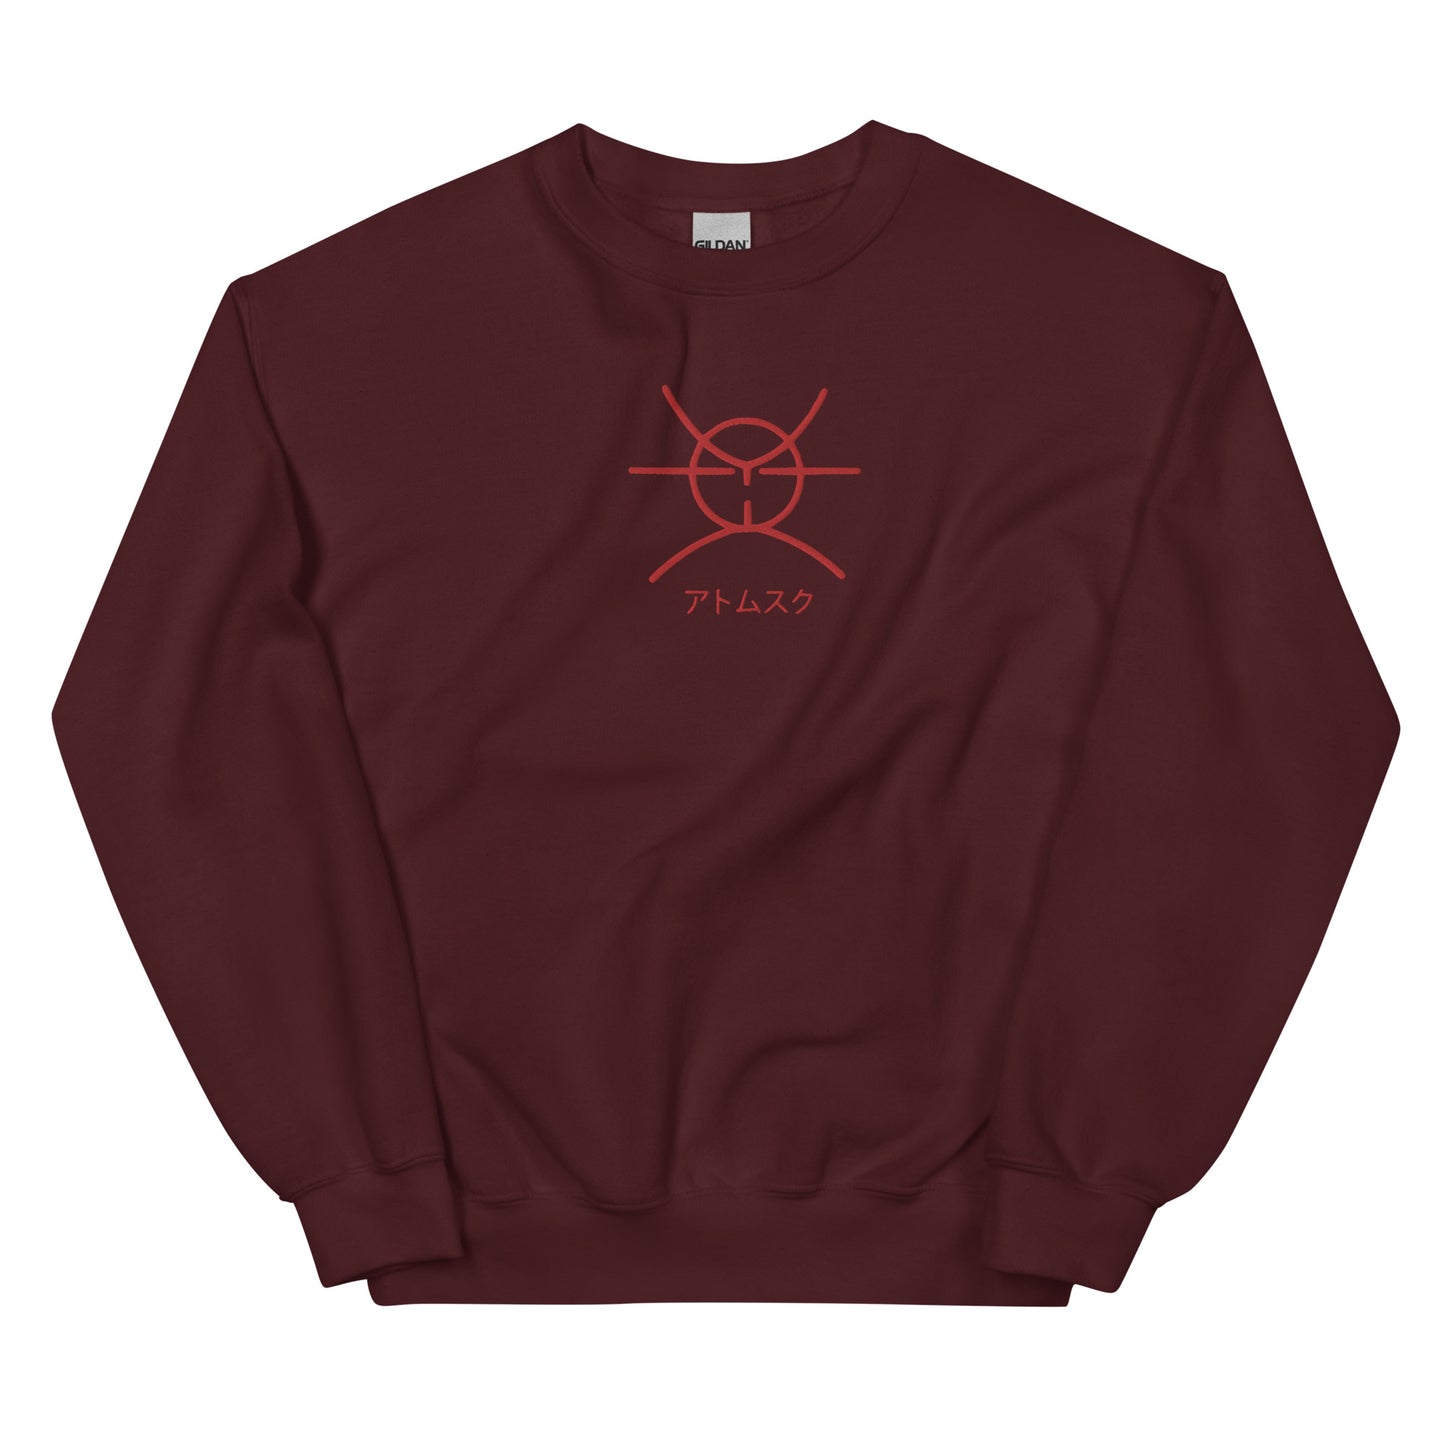 Atomsks Symbol Sweatshirt crew neck